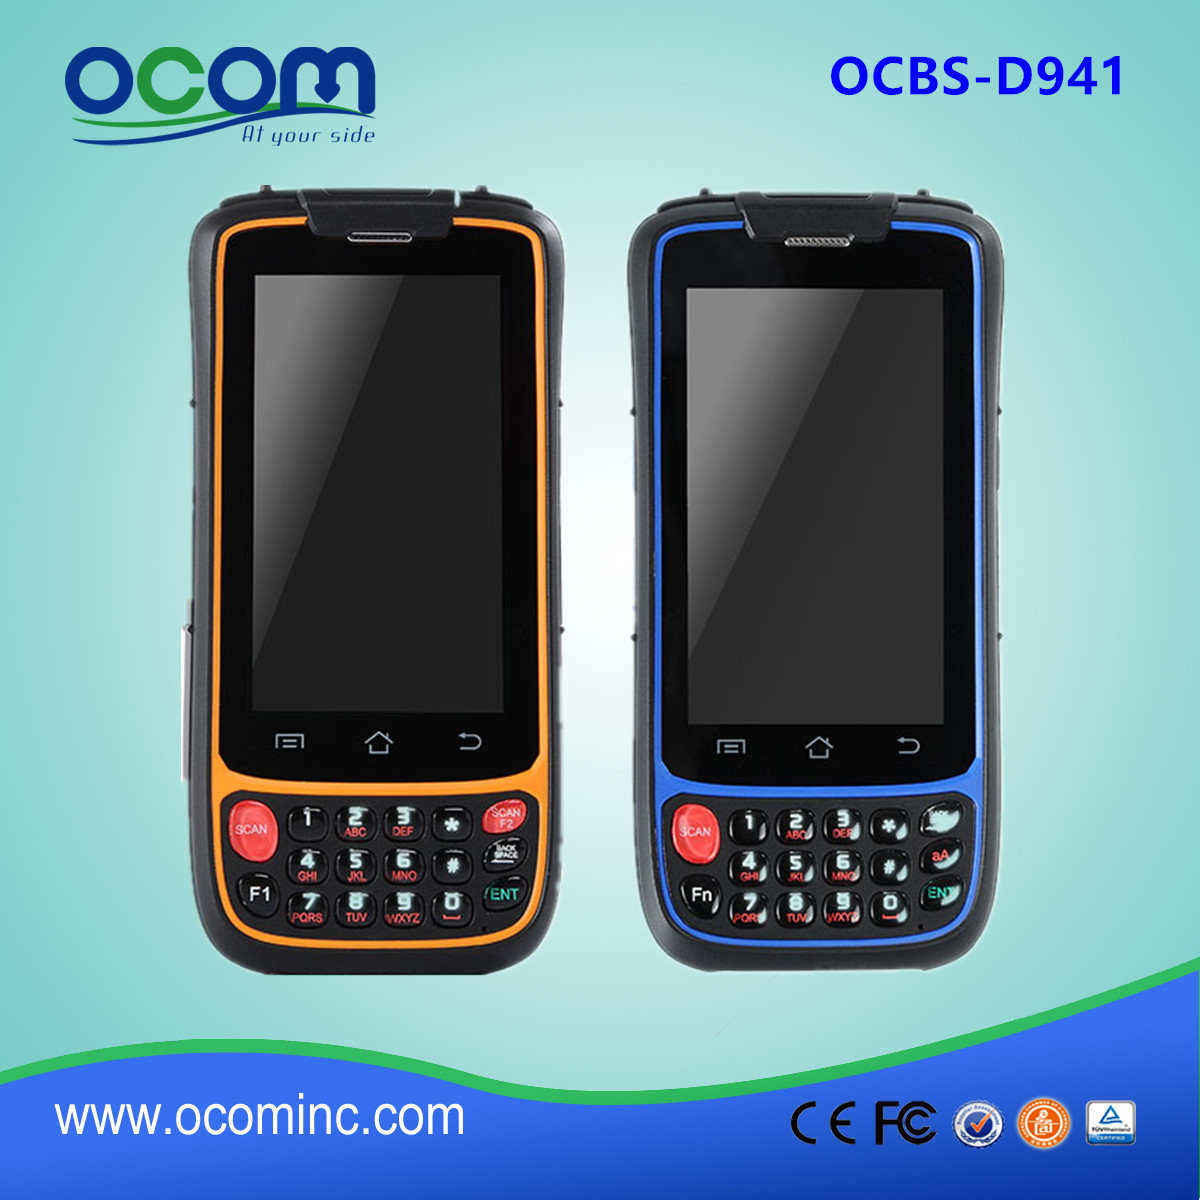 OCBS-D7000 --- China gemaakt van hoge kwaliteit touch screen android pda